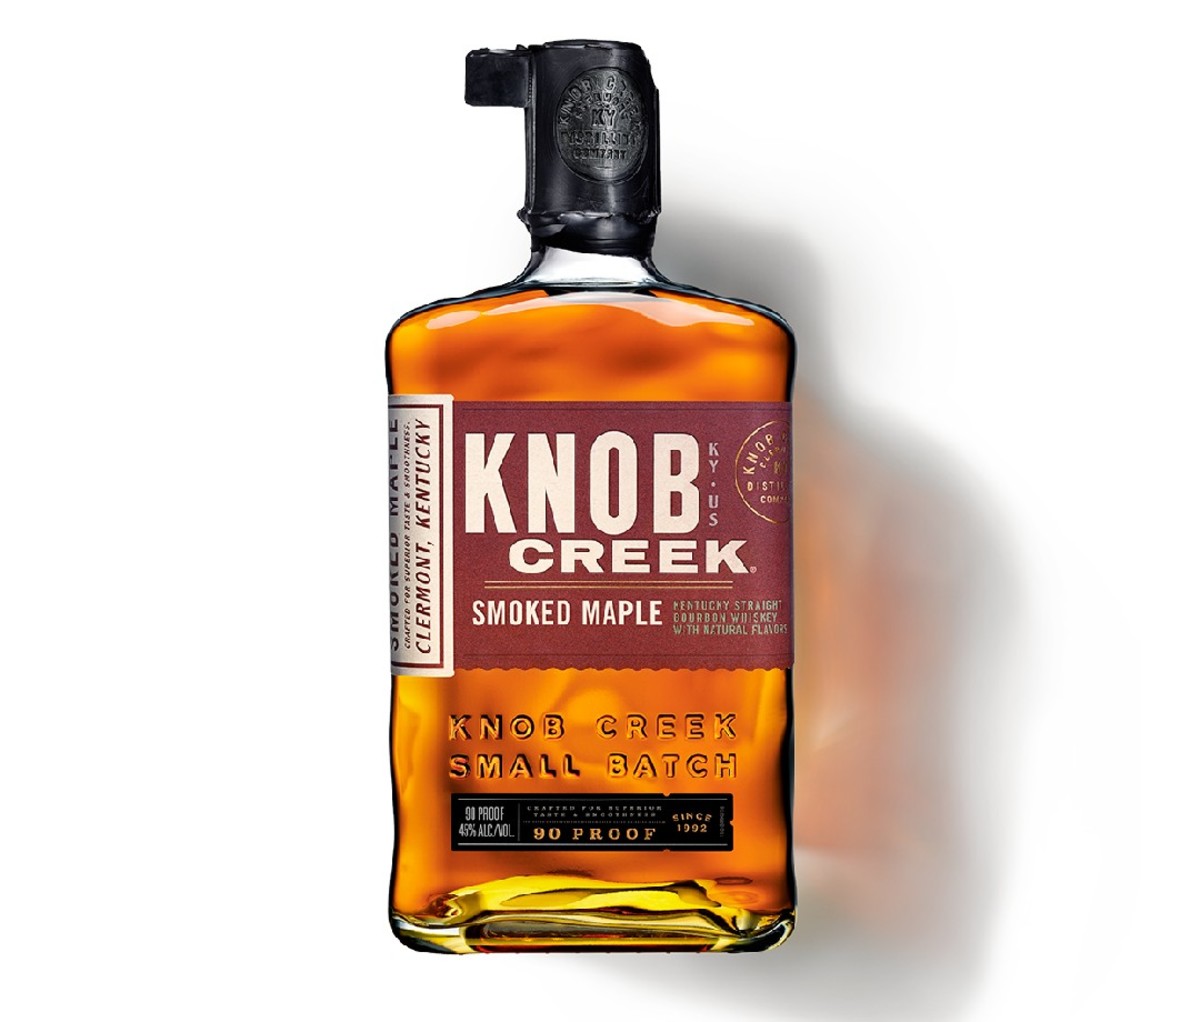 A bottle of Knob Creek Smoked Maple Bourbon.